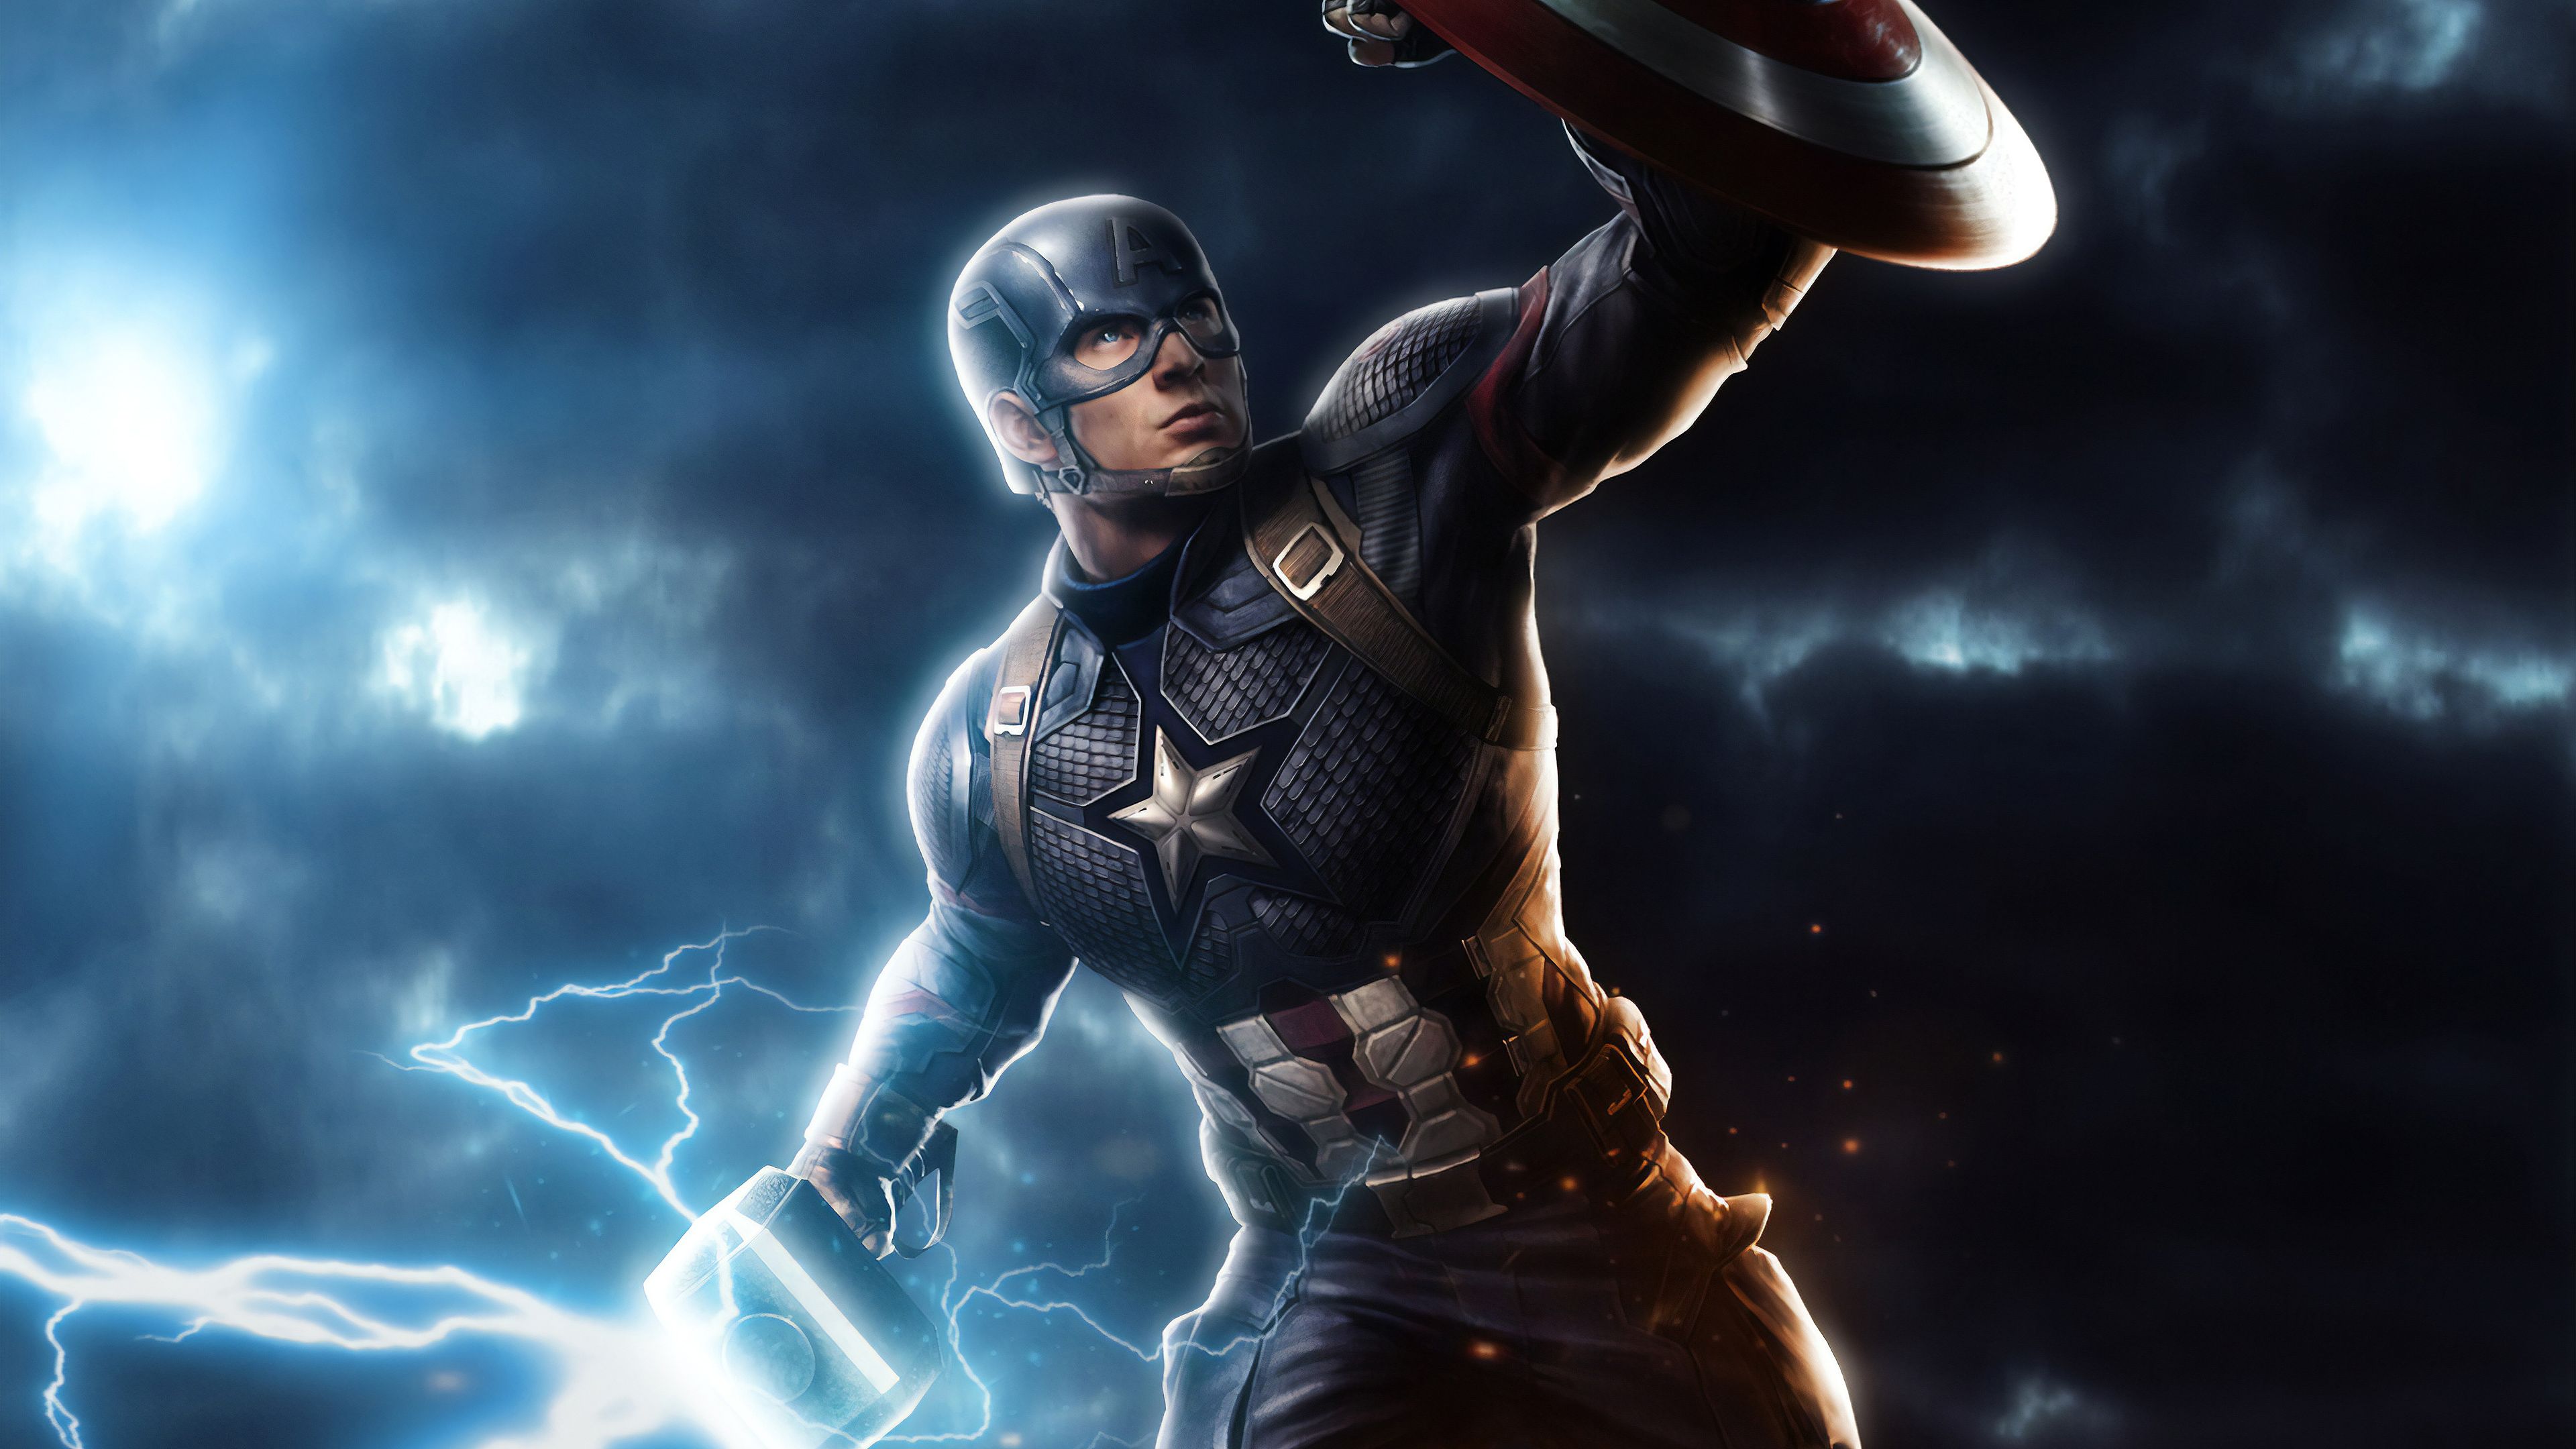 Captain America Mjolnir Avengers Endgame 4k Art, HD Superheroes, 4k Wallpaper, Image, Background, Photo and Picture